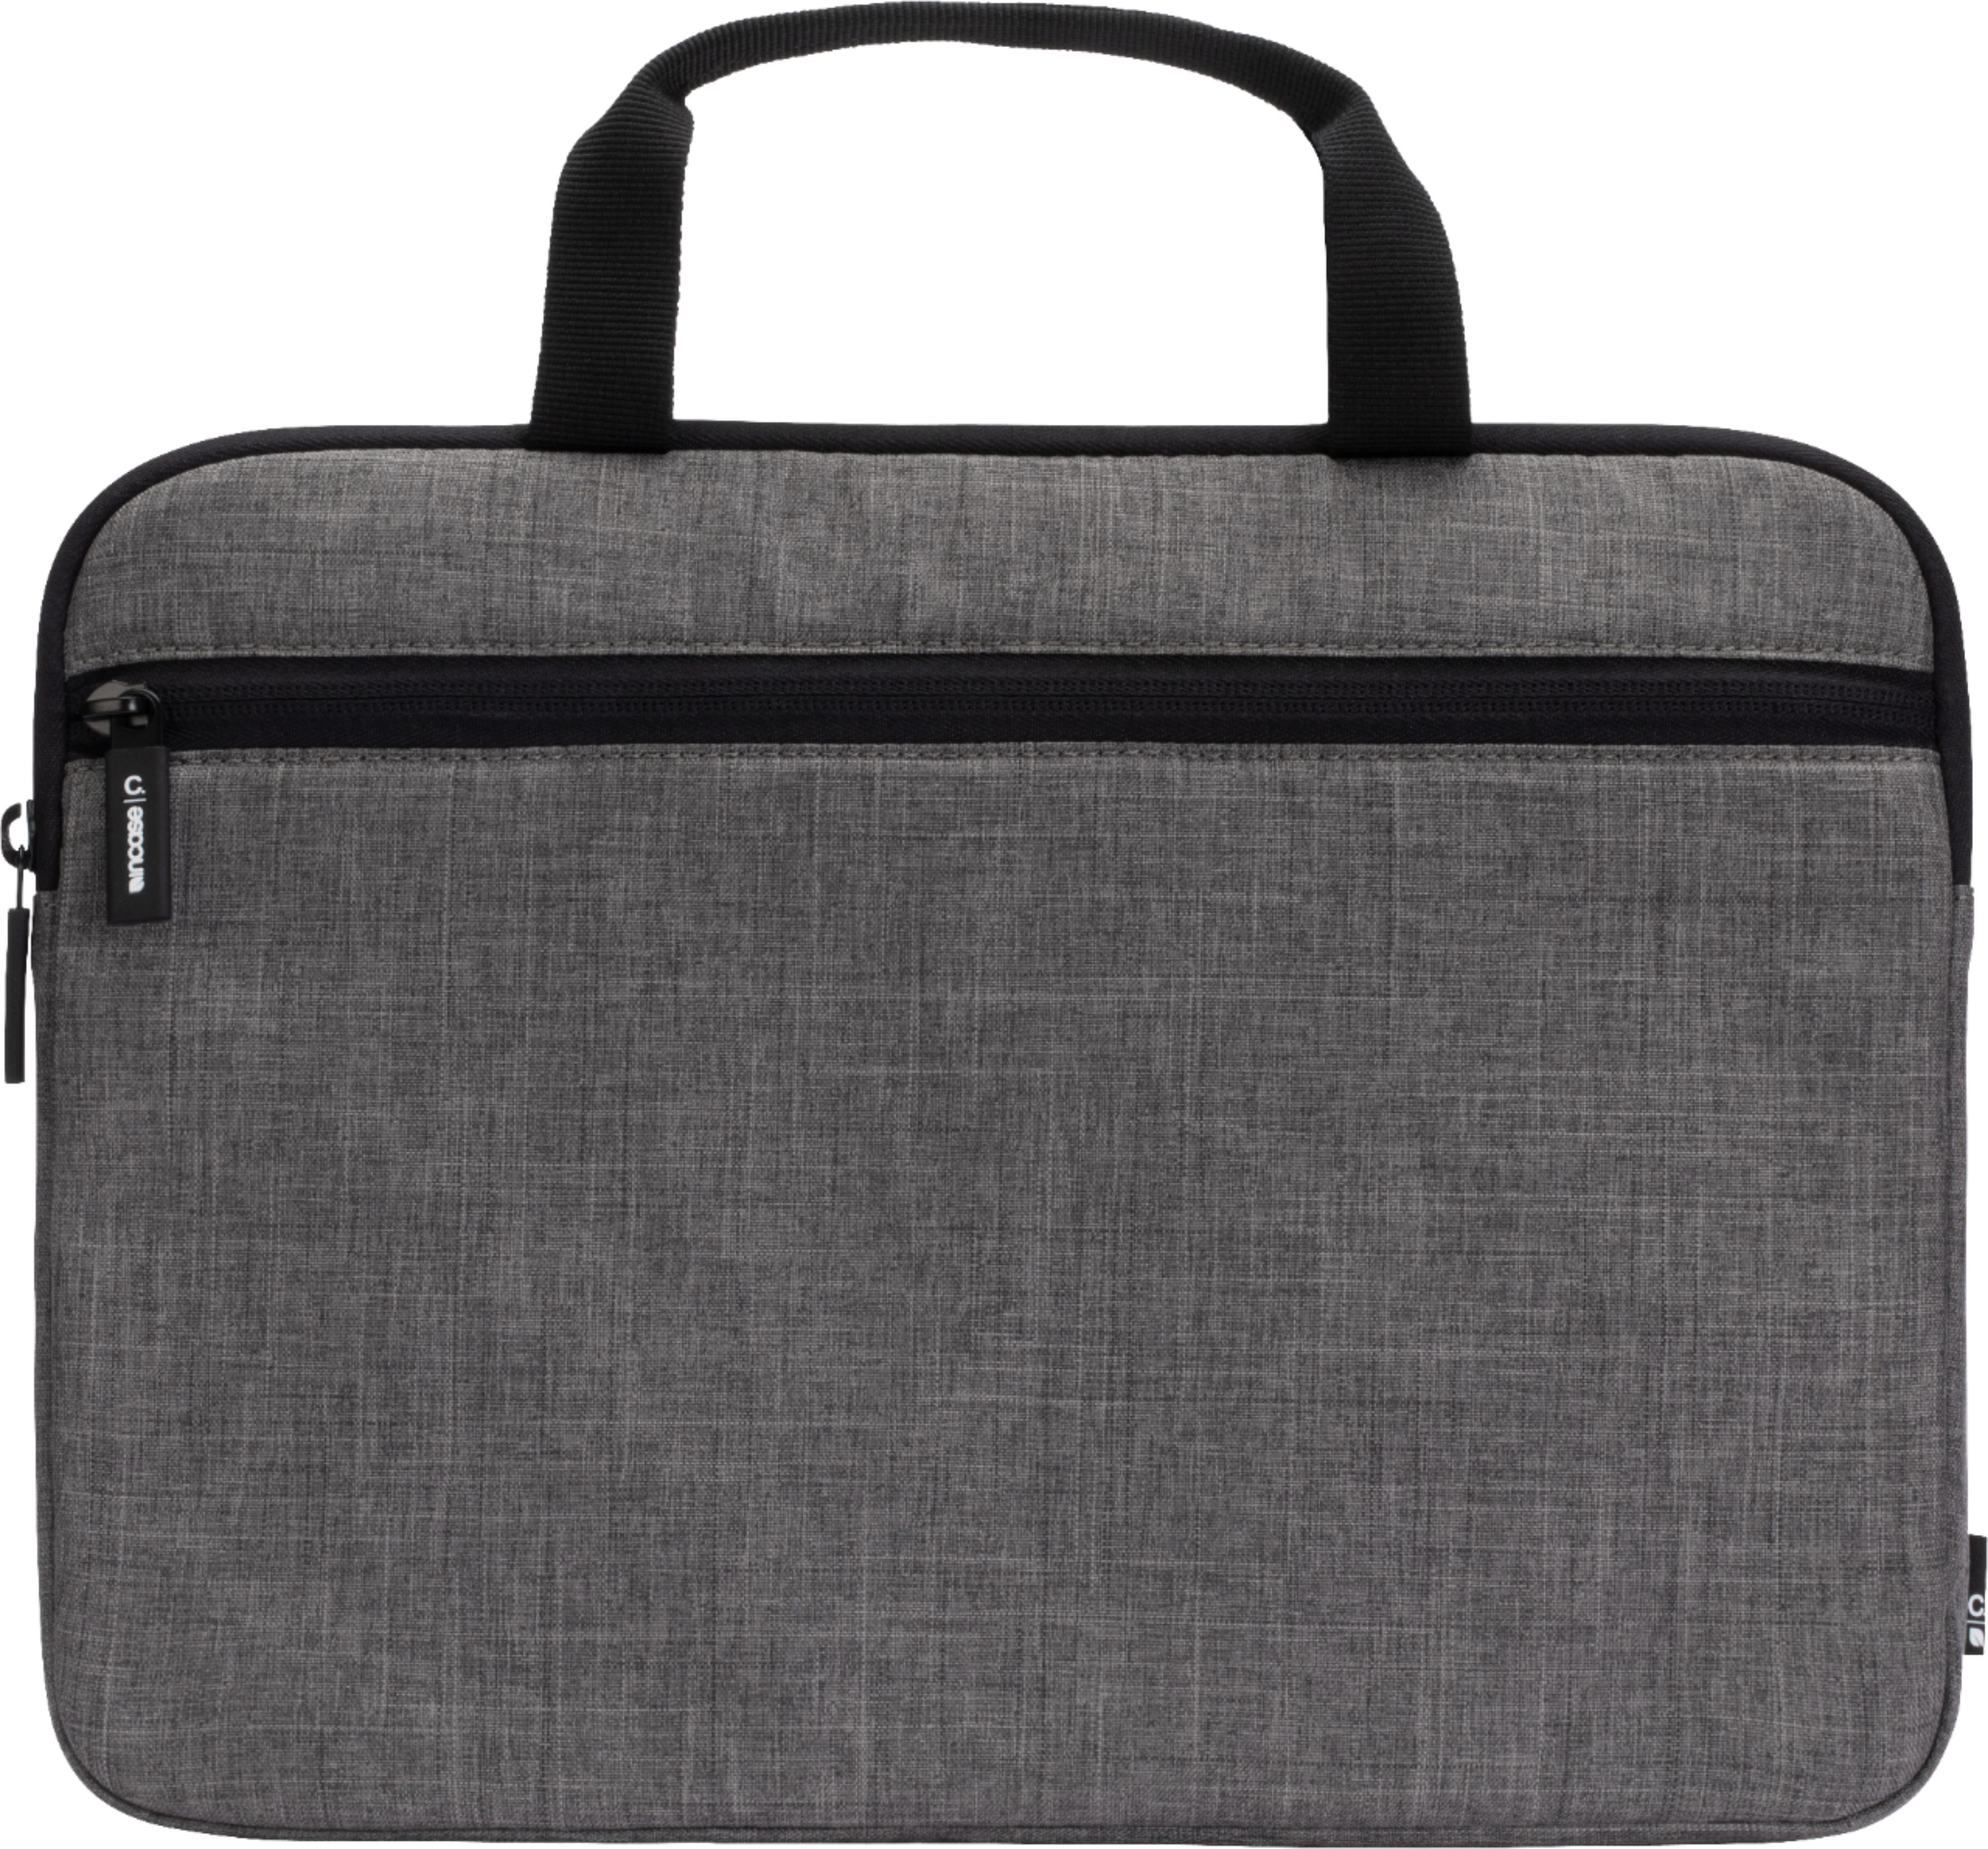 Straight Outta Portland Notebook Bags Zipper Laptop Bag 13 Inch Laptop Sleeve Case Bag Computer Bag 